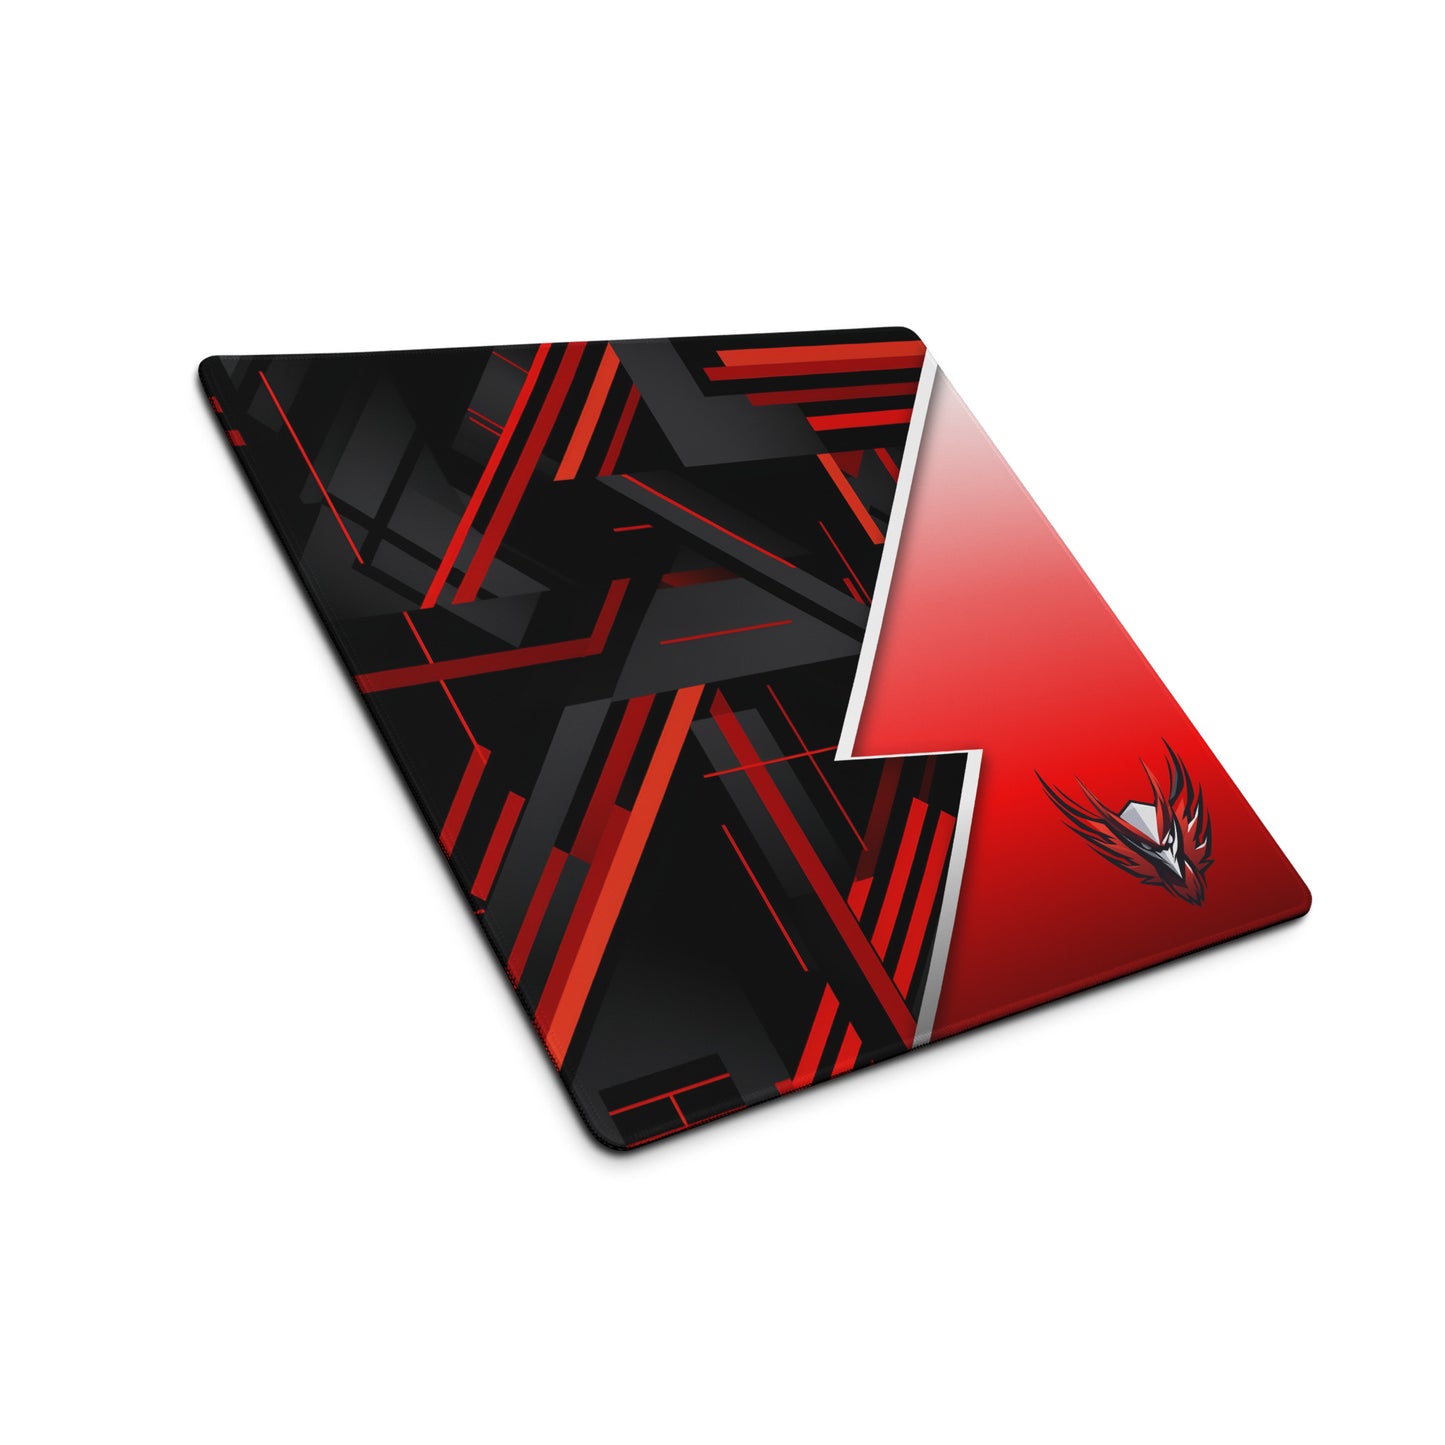 Neduz Crimson Ravens XXL Gaming Mouse Pad PRO | Non-Slip Rubber Base, Large Size, High-Quality Edge Stitching